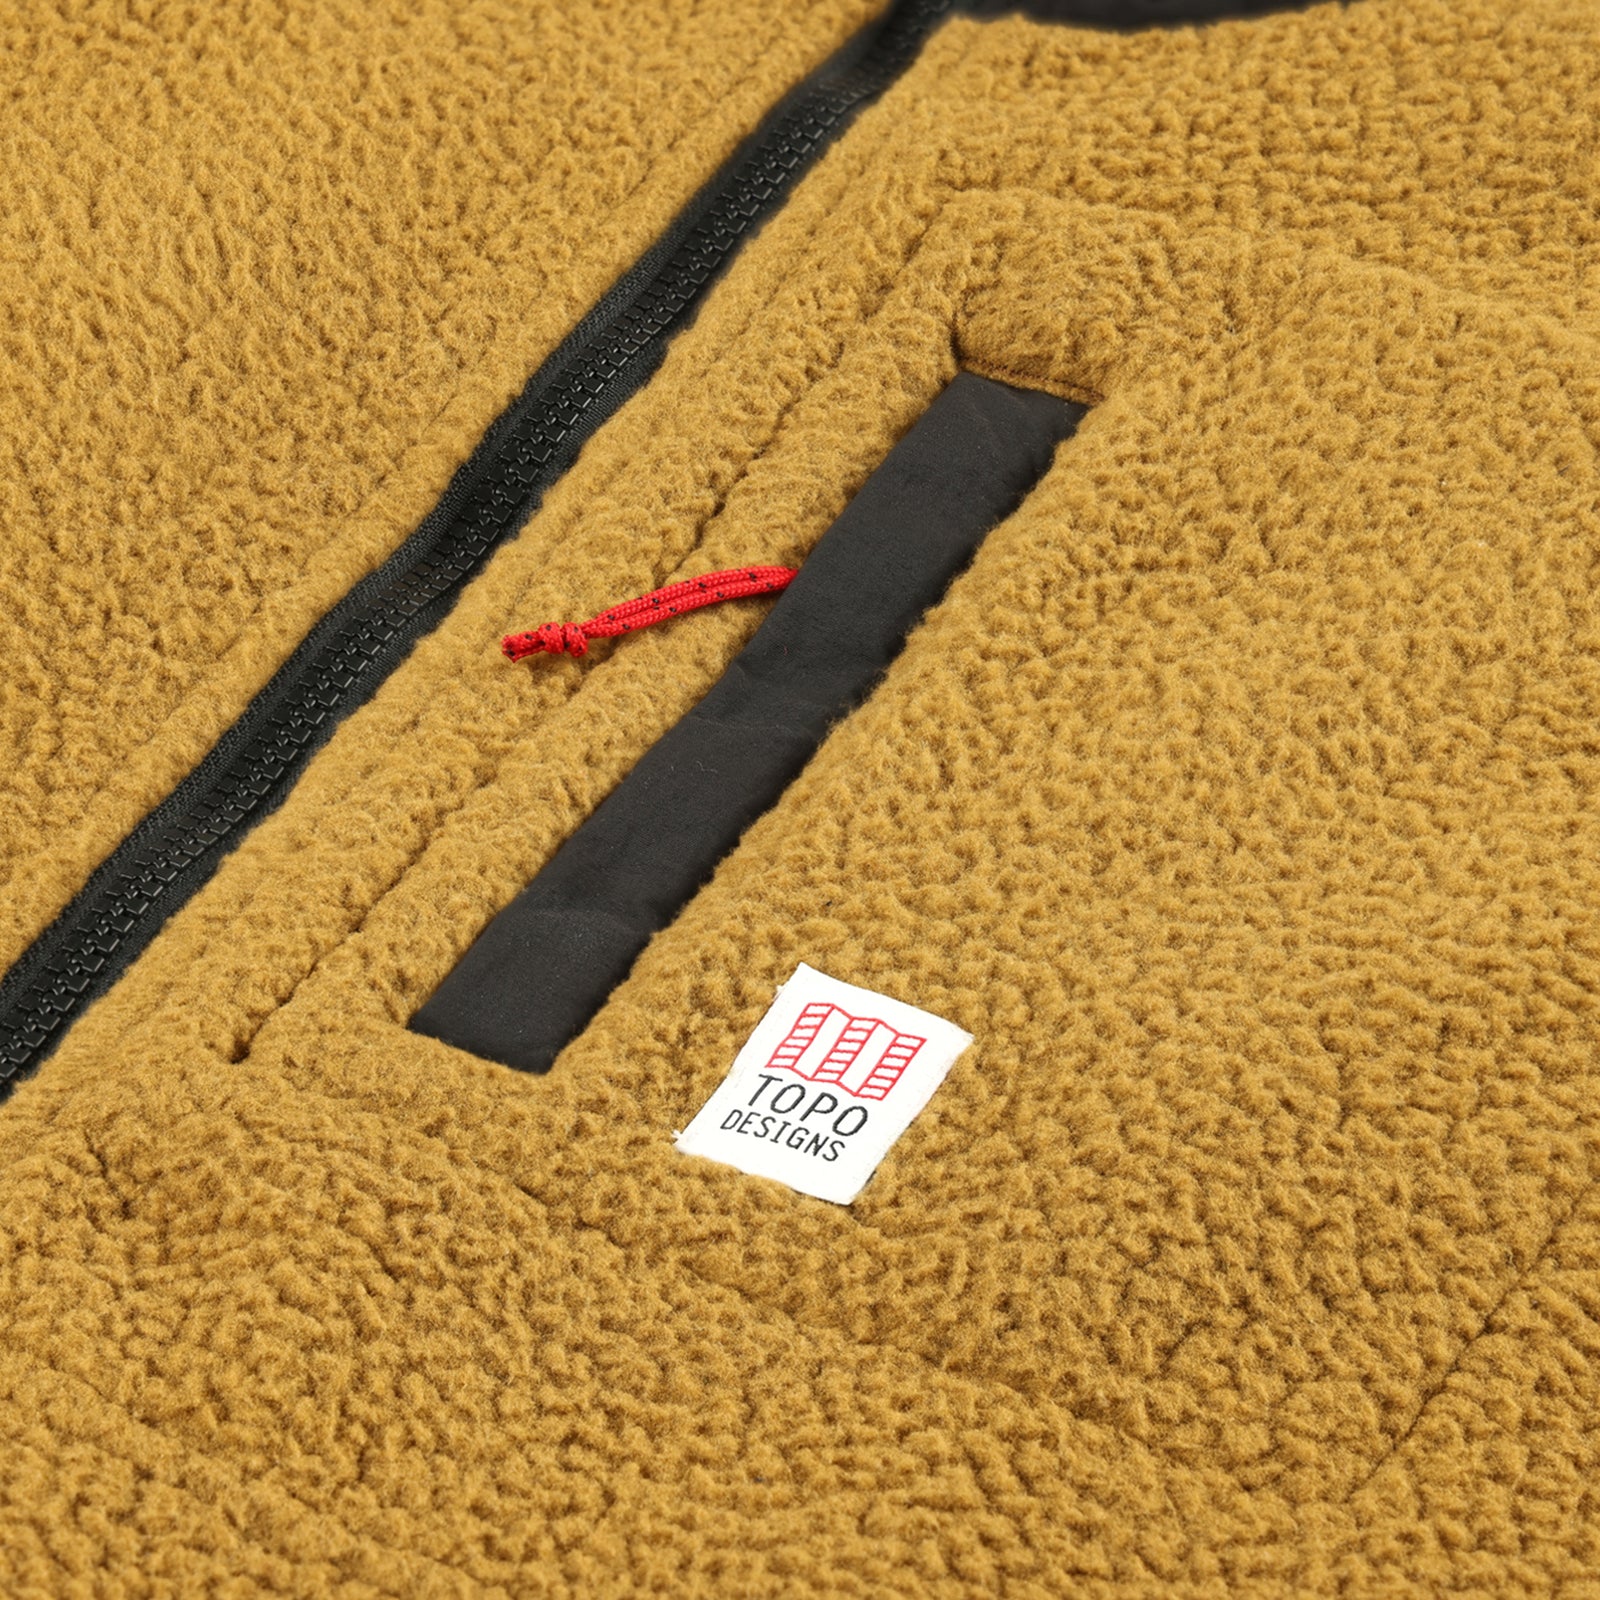 Detail shot of Topo Designs Men's Mountain Fleece Pullover in "dark khaki" brown showing chest zipper pocket and logo patch.